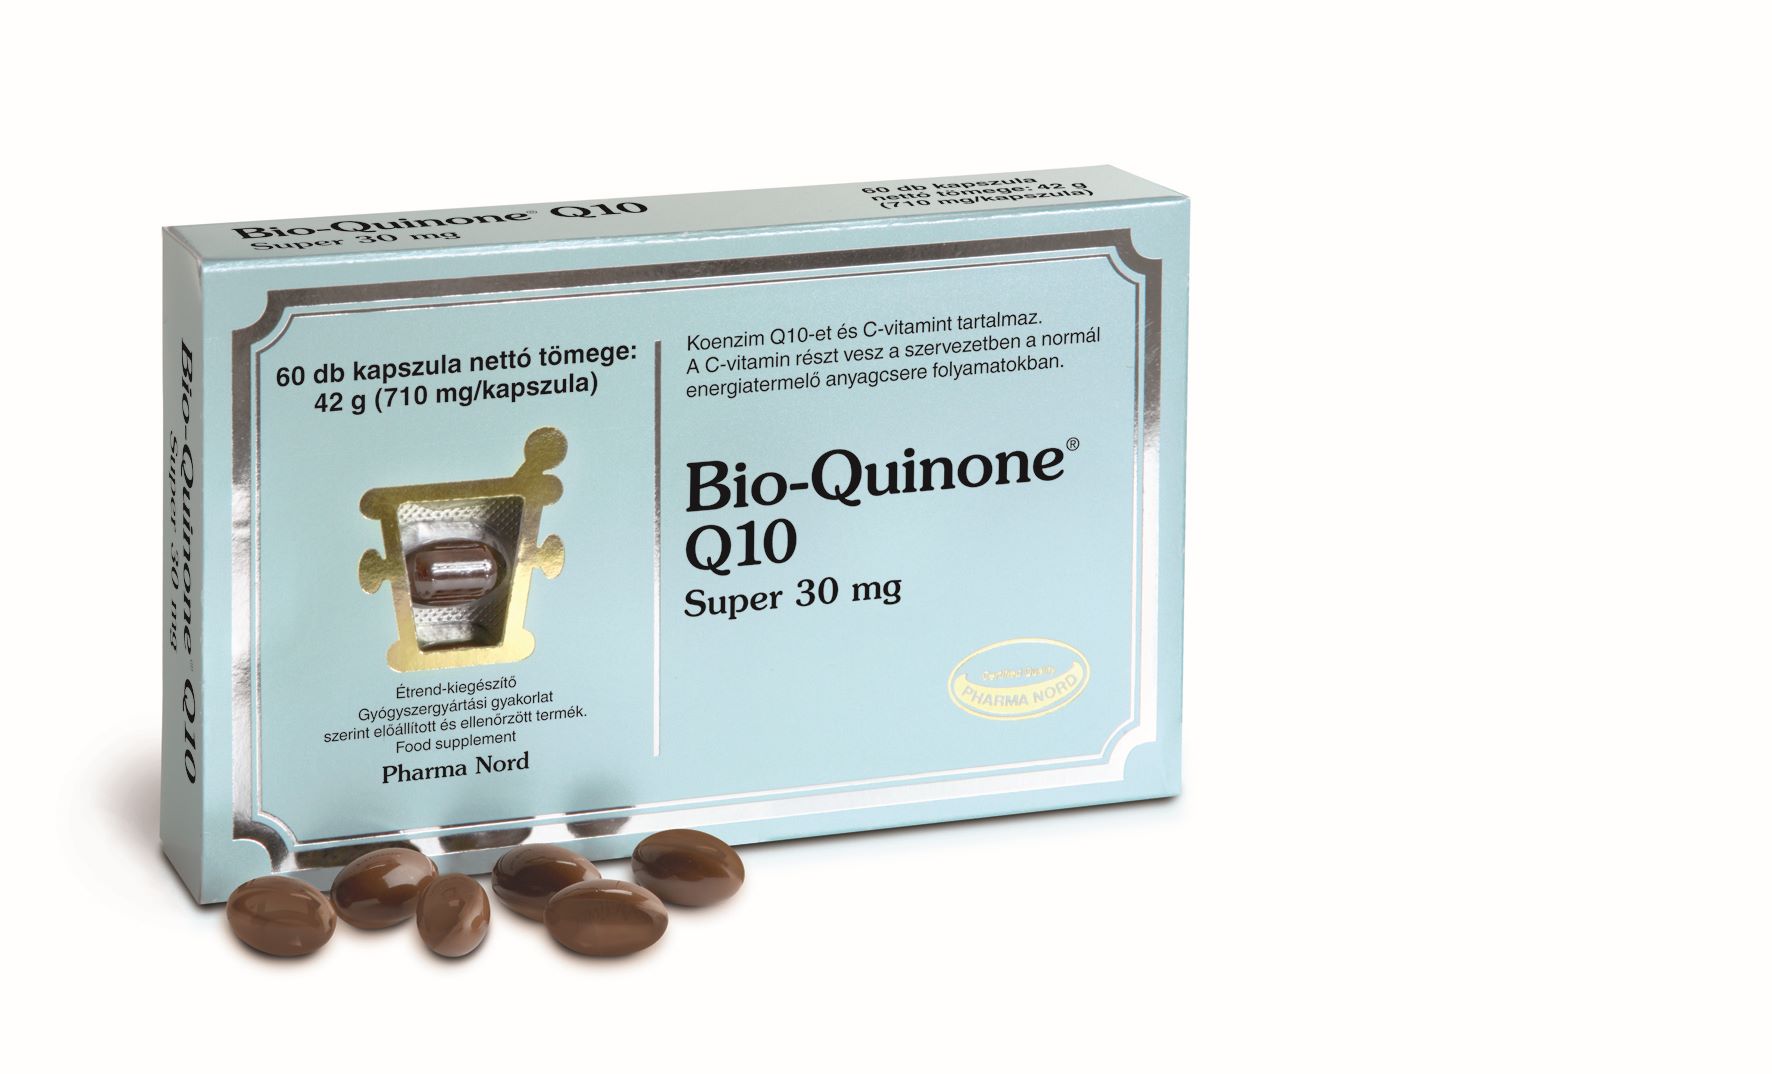 Bio - Quinone Super 30 mg kapszula Pharma Nord